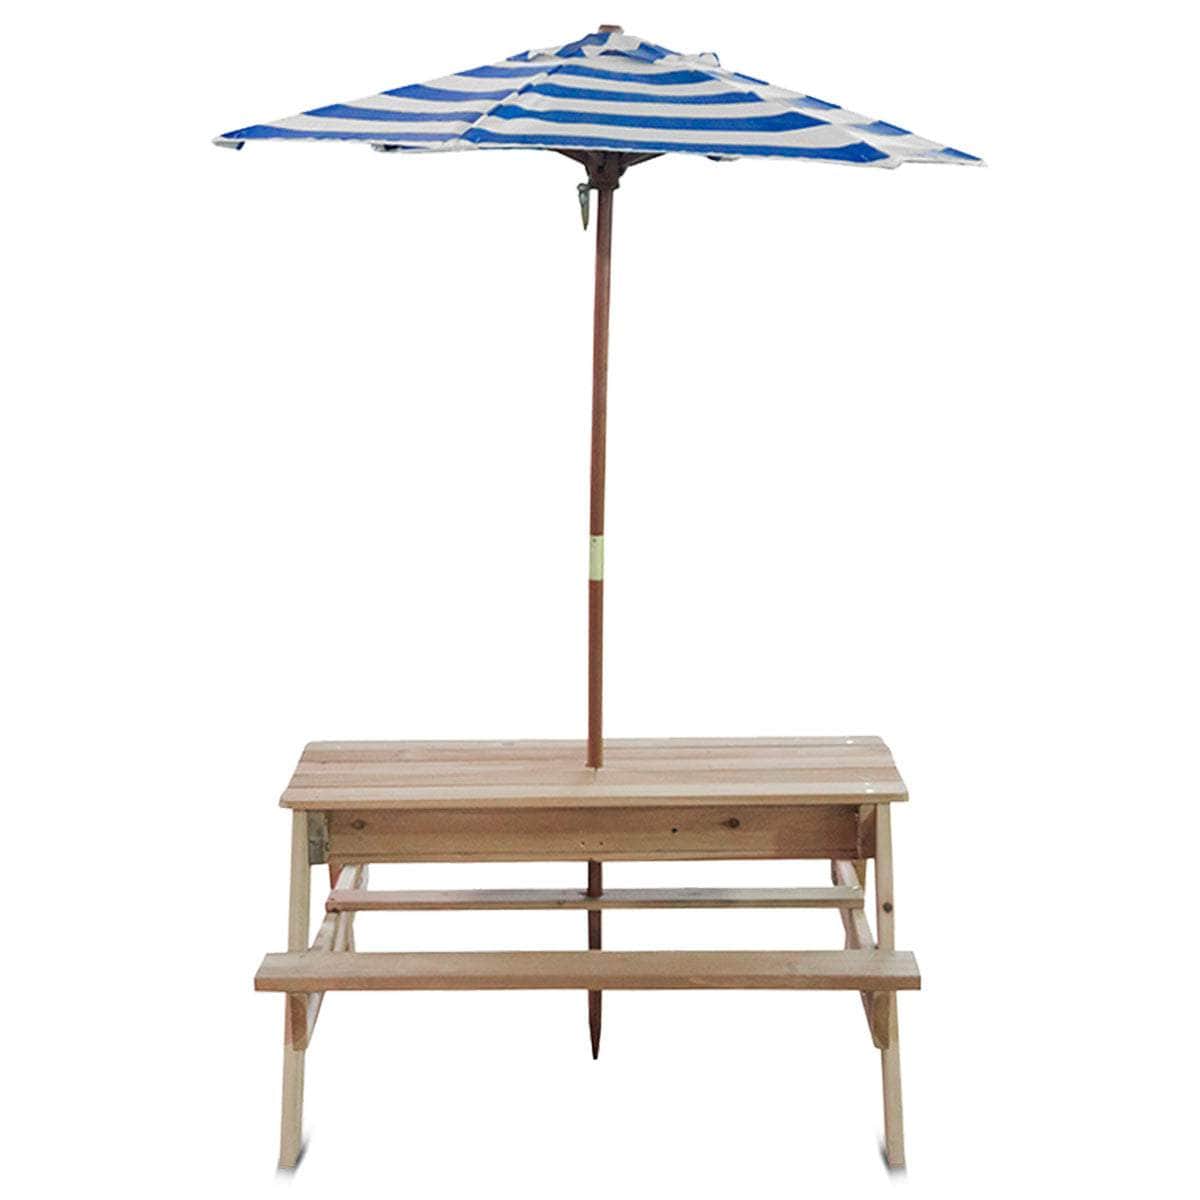 Sunrise Splash: Interactive Sand & Water Table with Umbrella